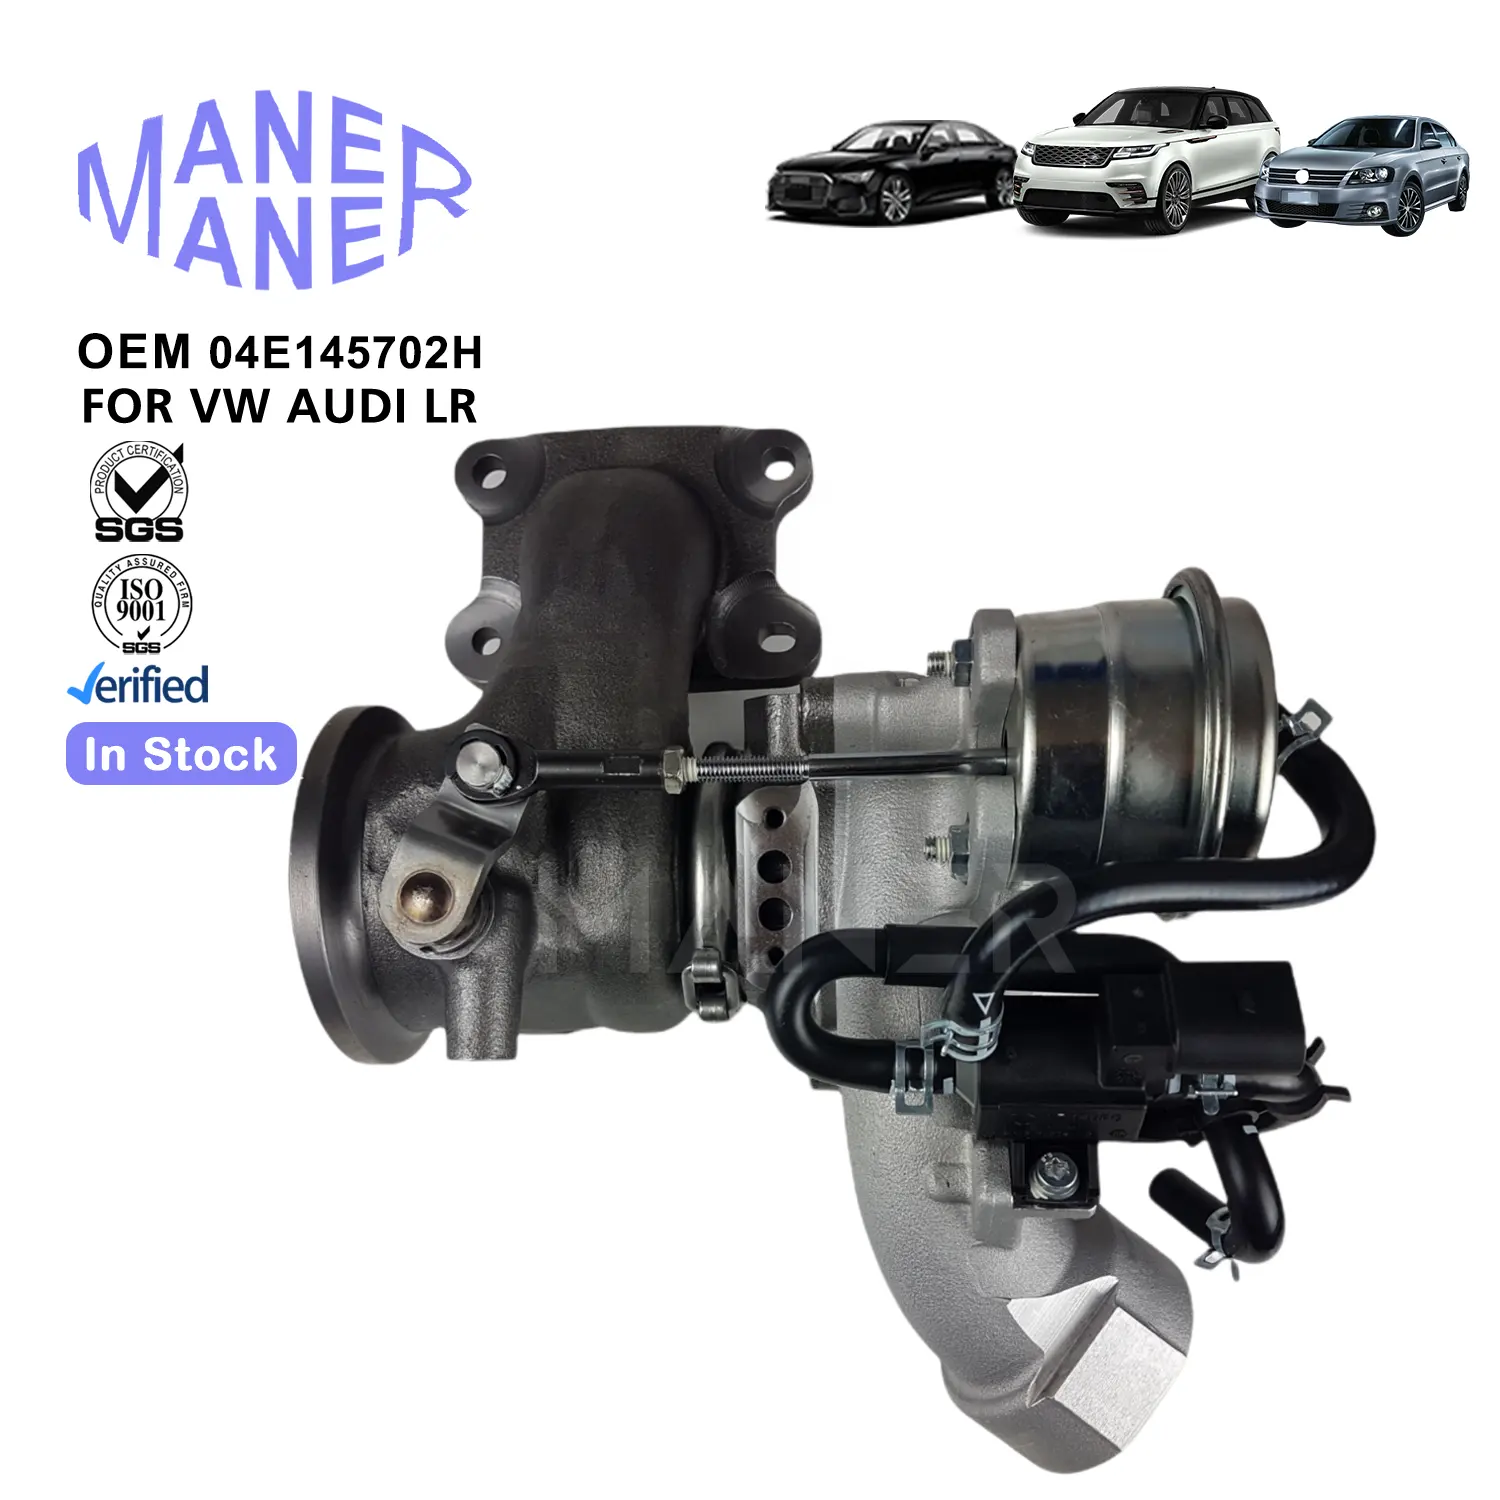 MANER Auto Engine Systems 04E145702H 04E145702Jは、A3 Golf V 2.0L TFSI EA211用のよくできたターボチャージャーを製造しています